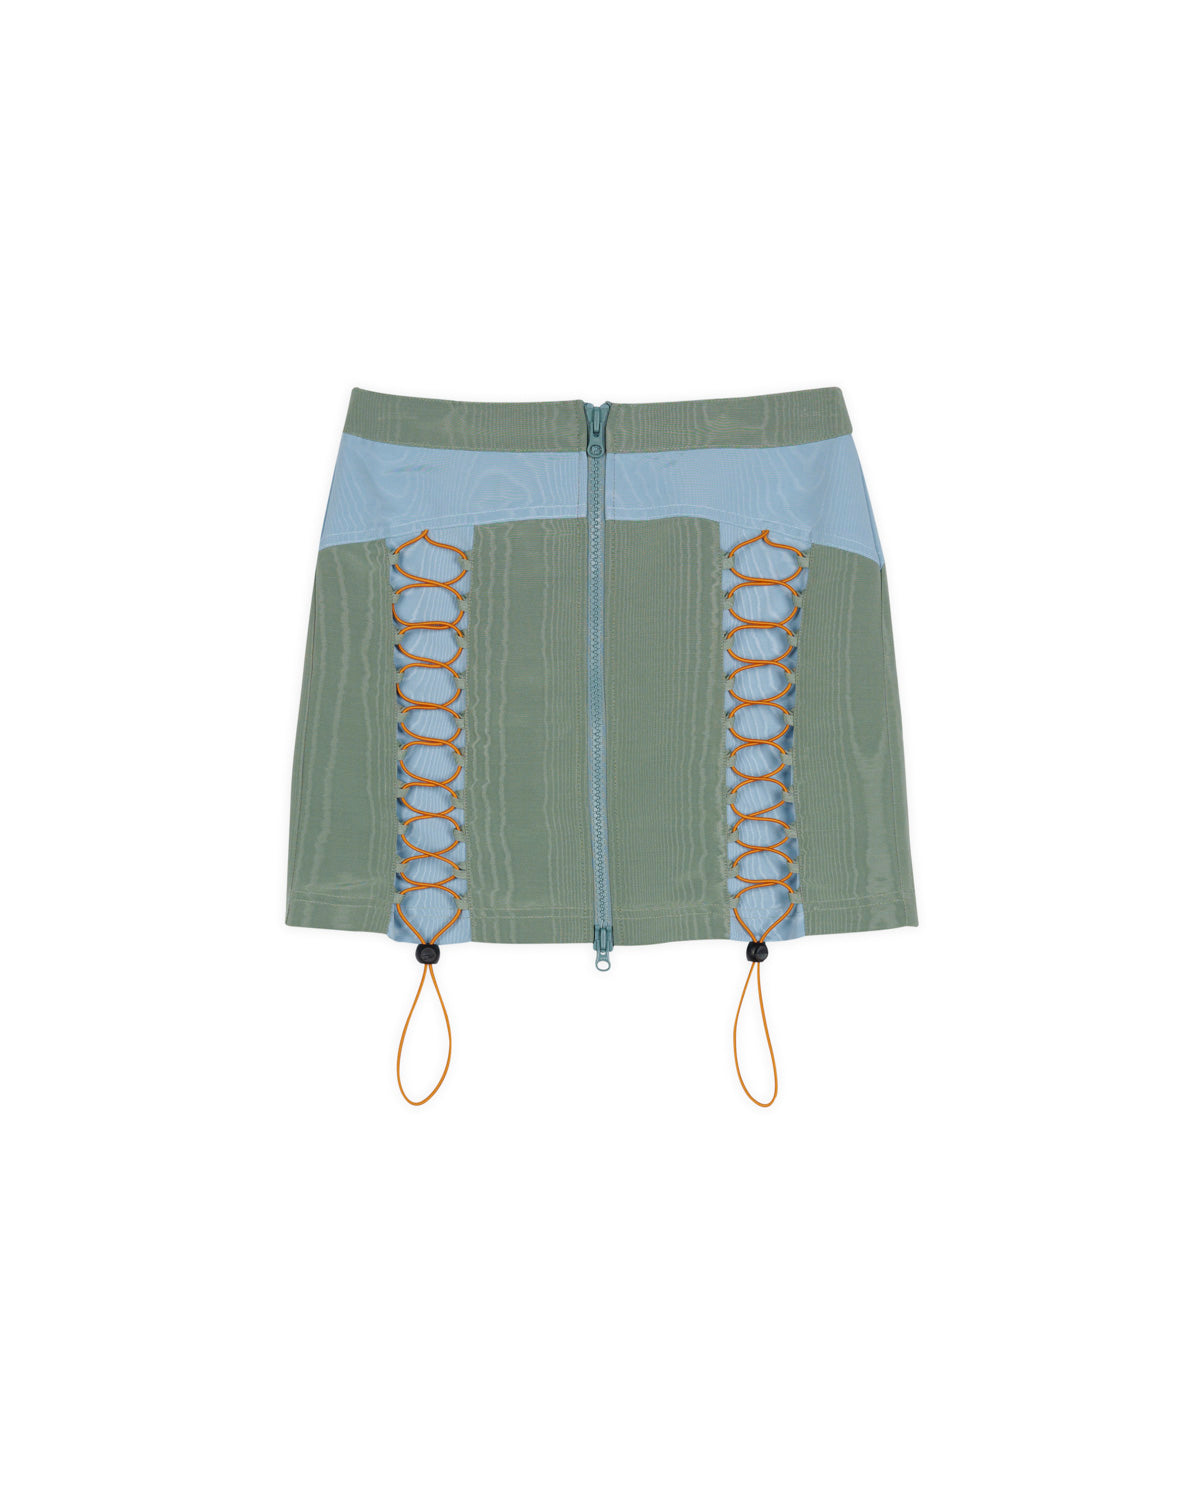 Bungee Zip Mini Skirt - Seafoam 1